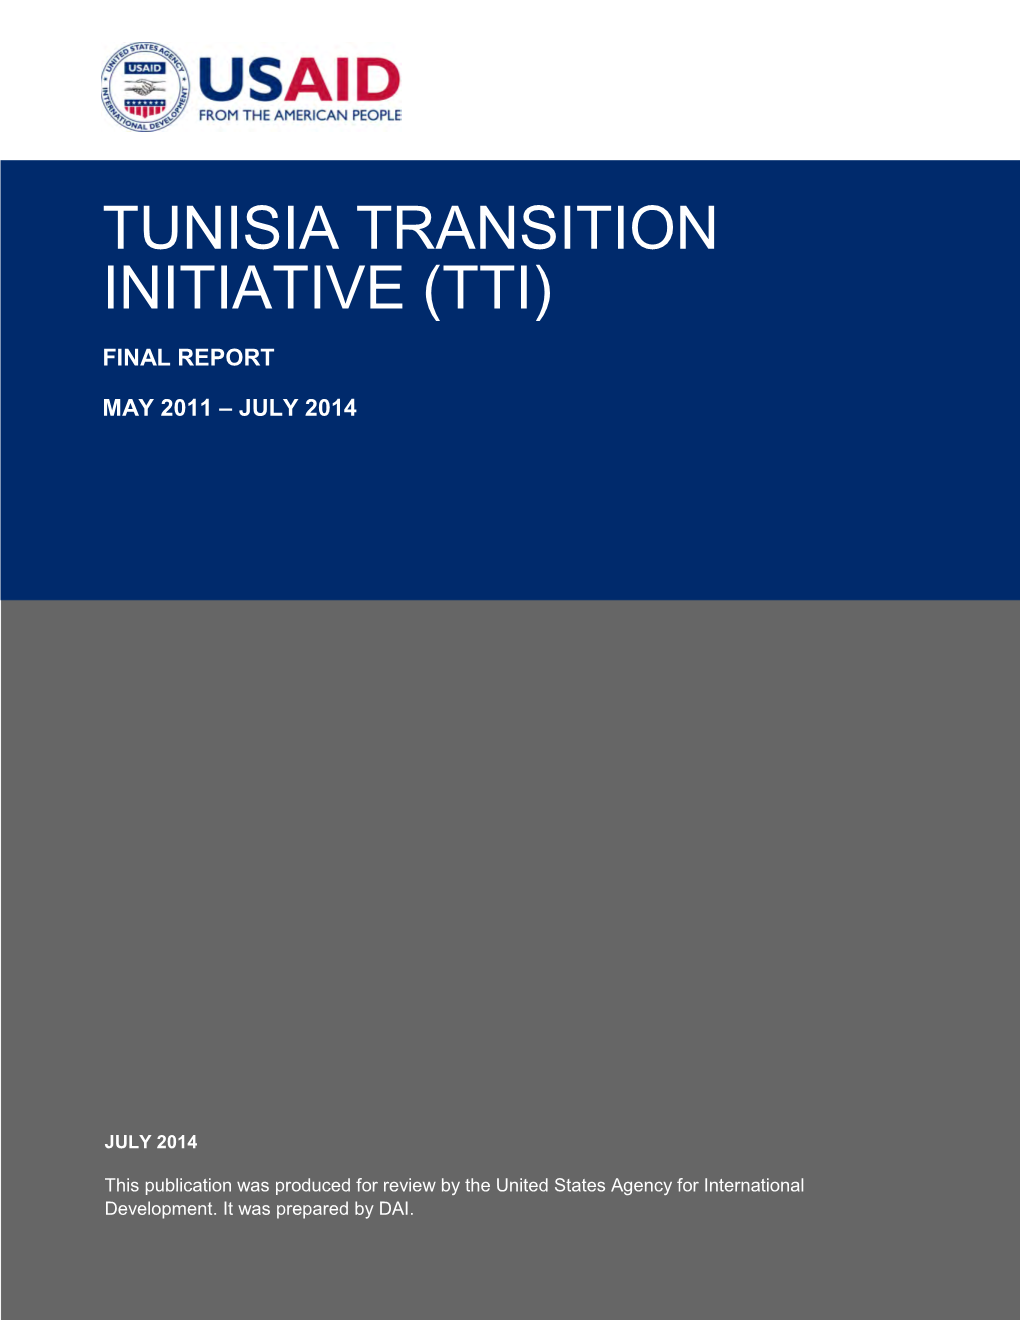 Tunisia Transition Initiative (Tti) Final Report